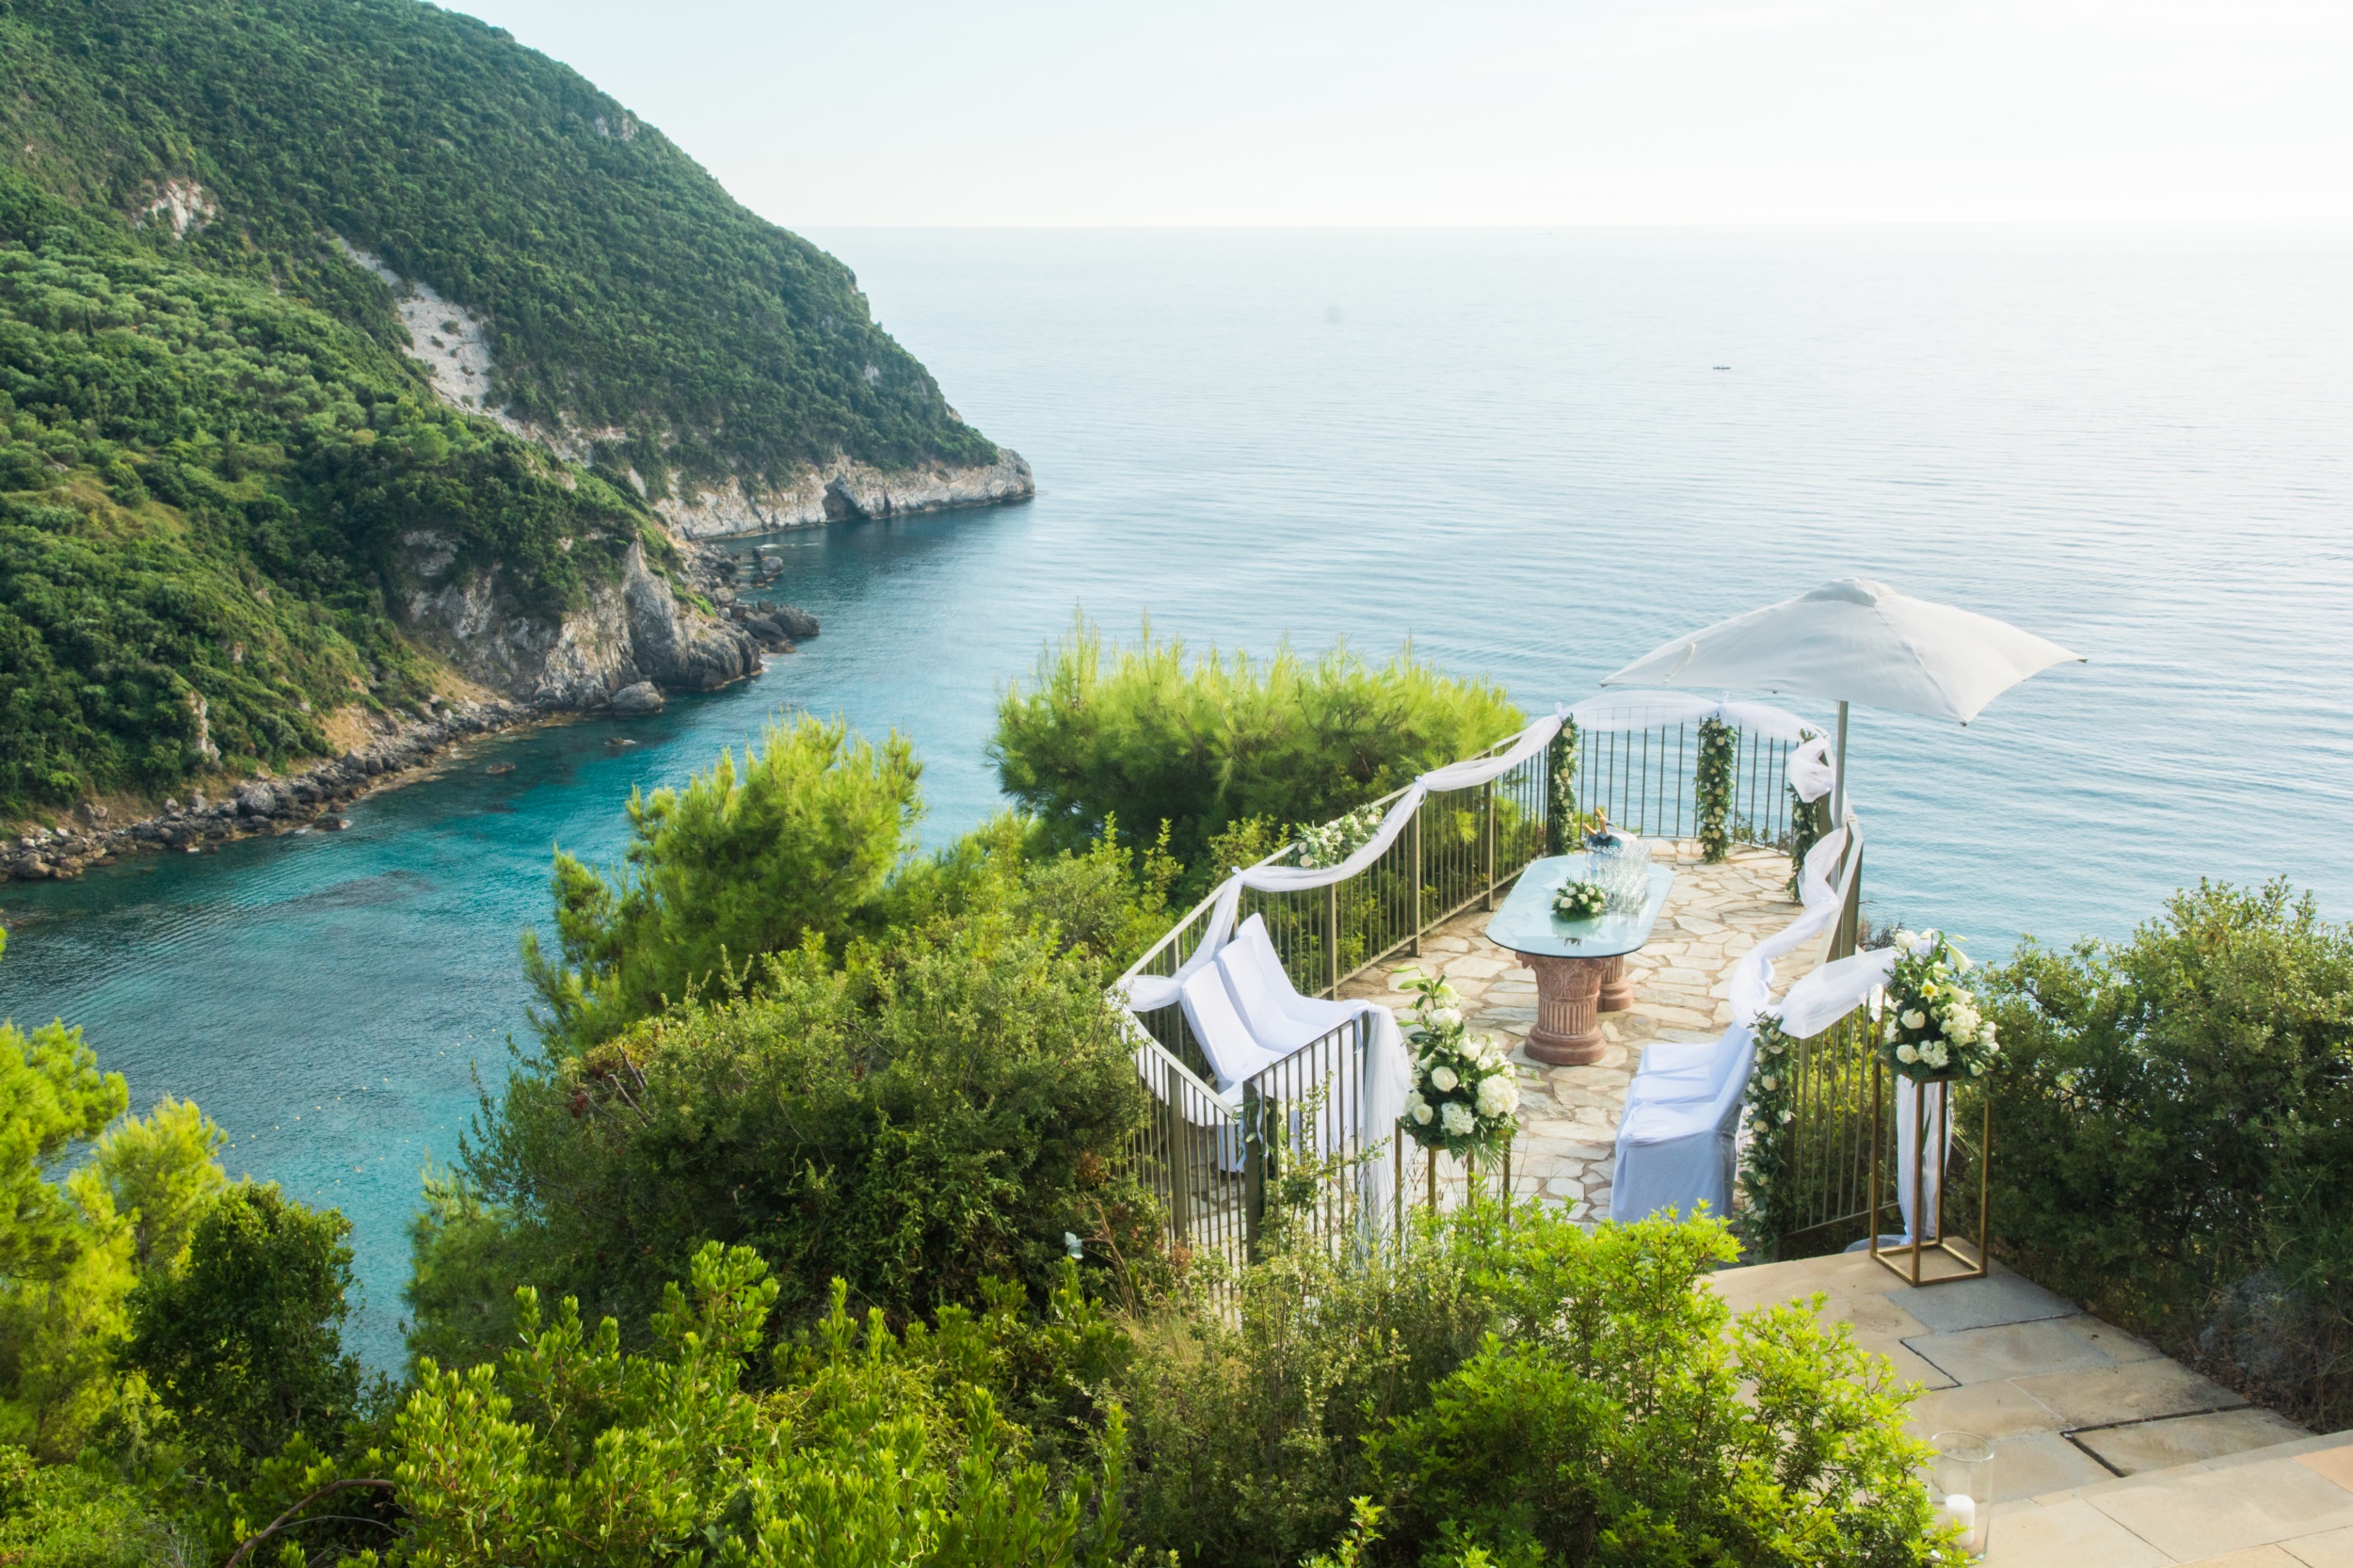 Book your wedding day in Atlantica Grand Mediterraneo Resort and Spa Corfu